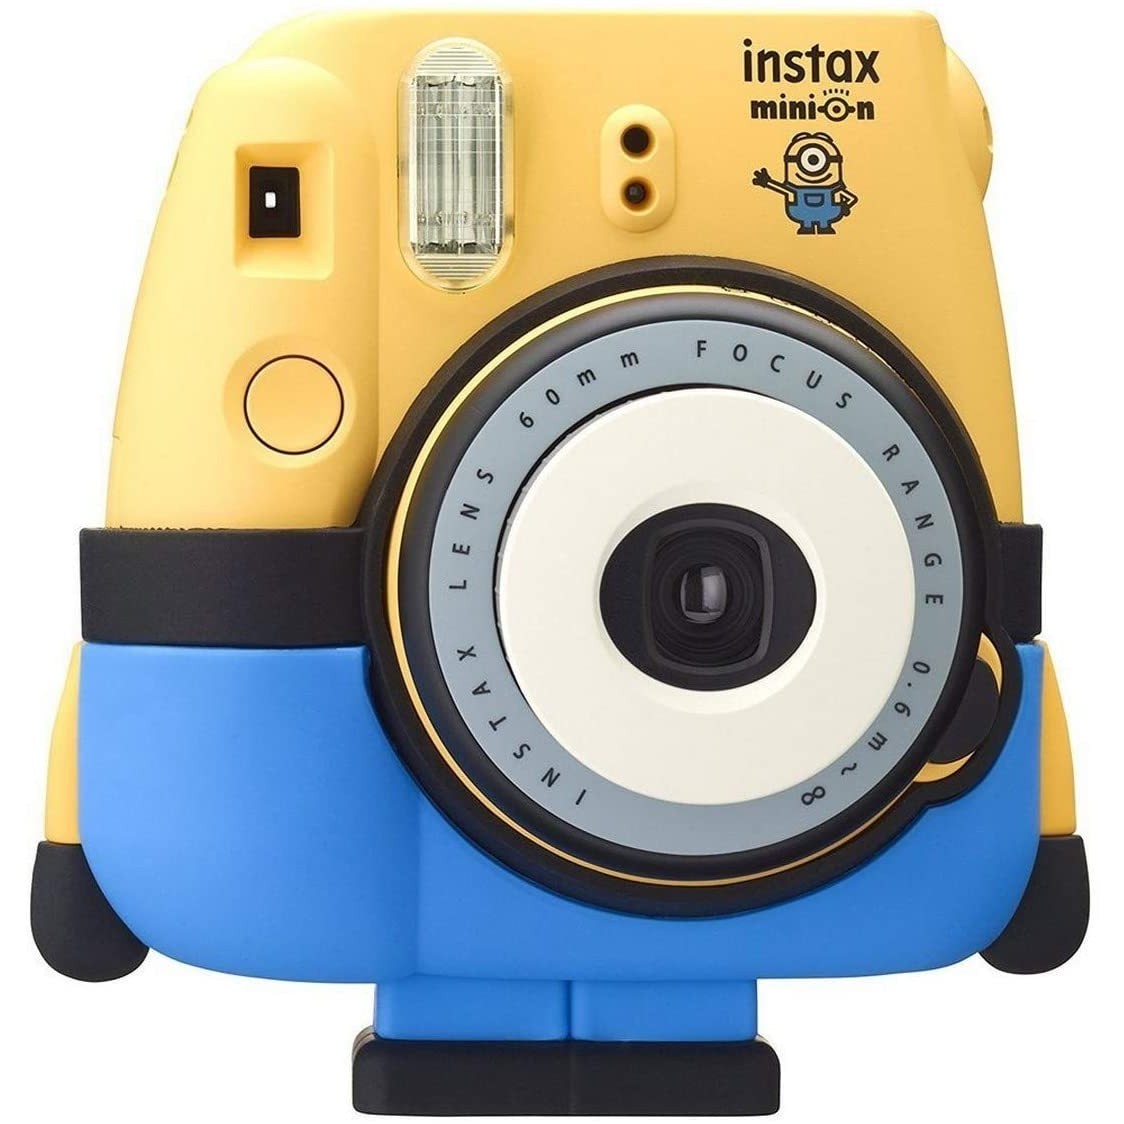 Фотокамеры моментальной печати Fuji Instax Mini 8 Minion